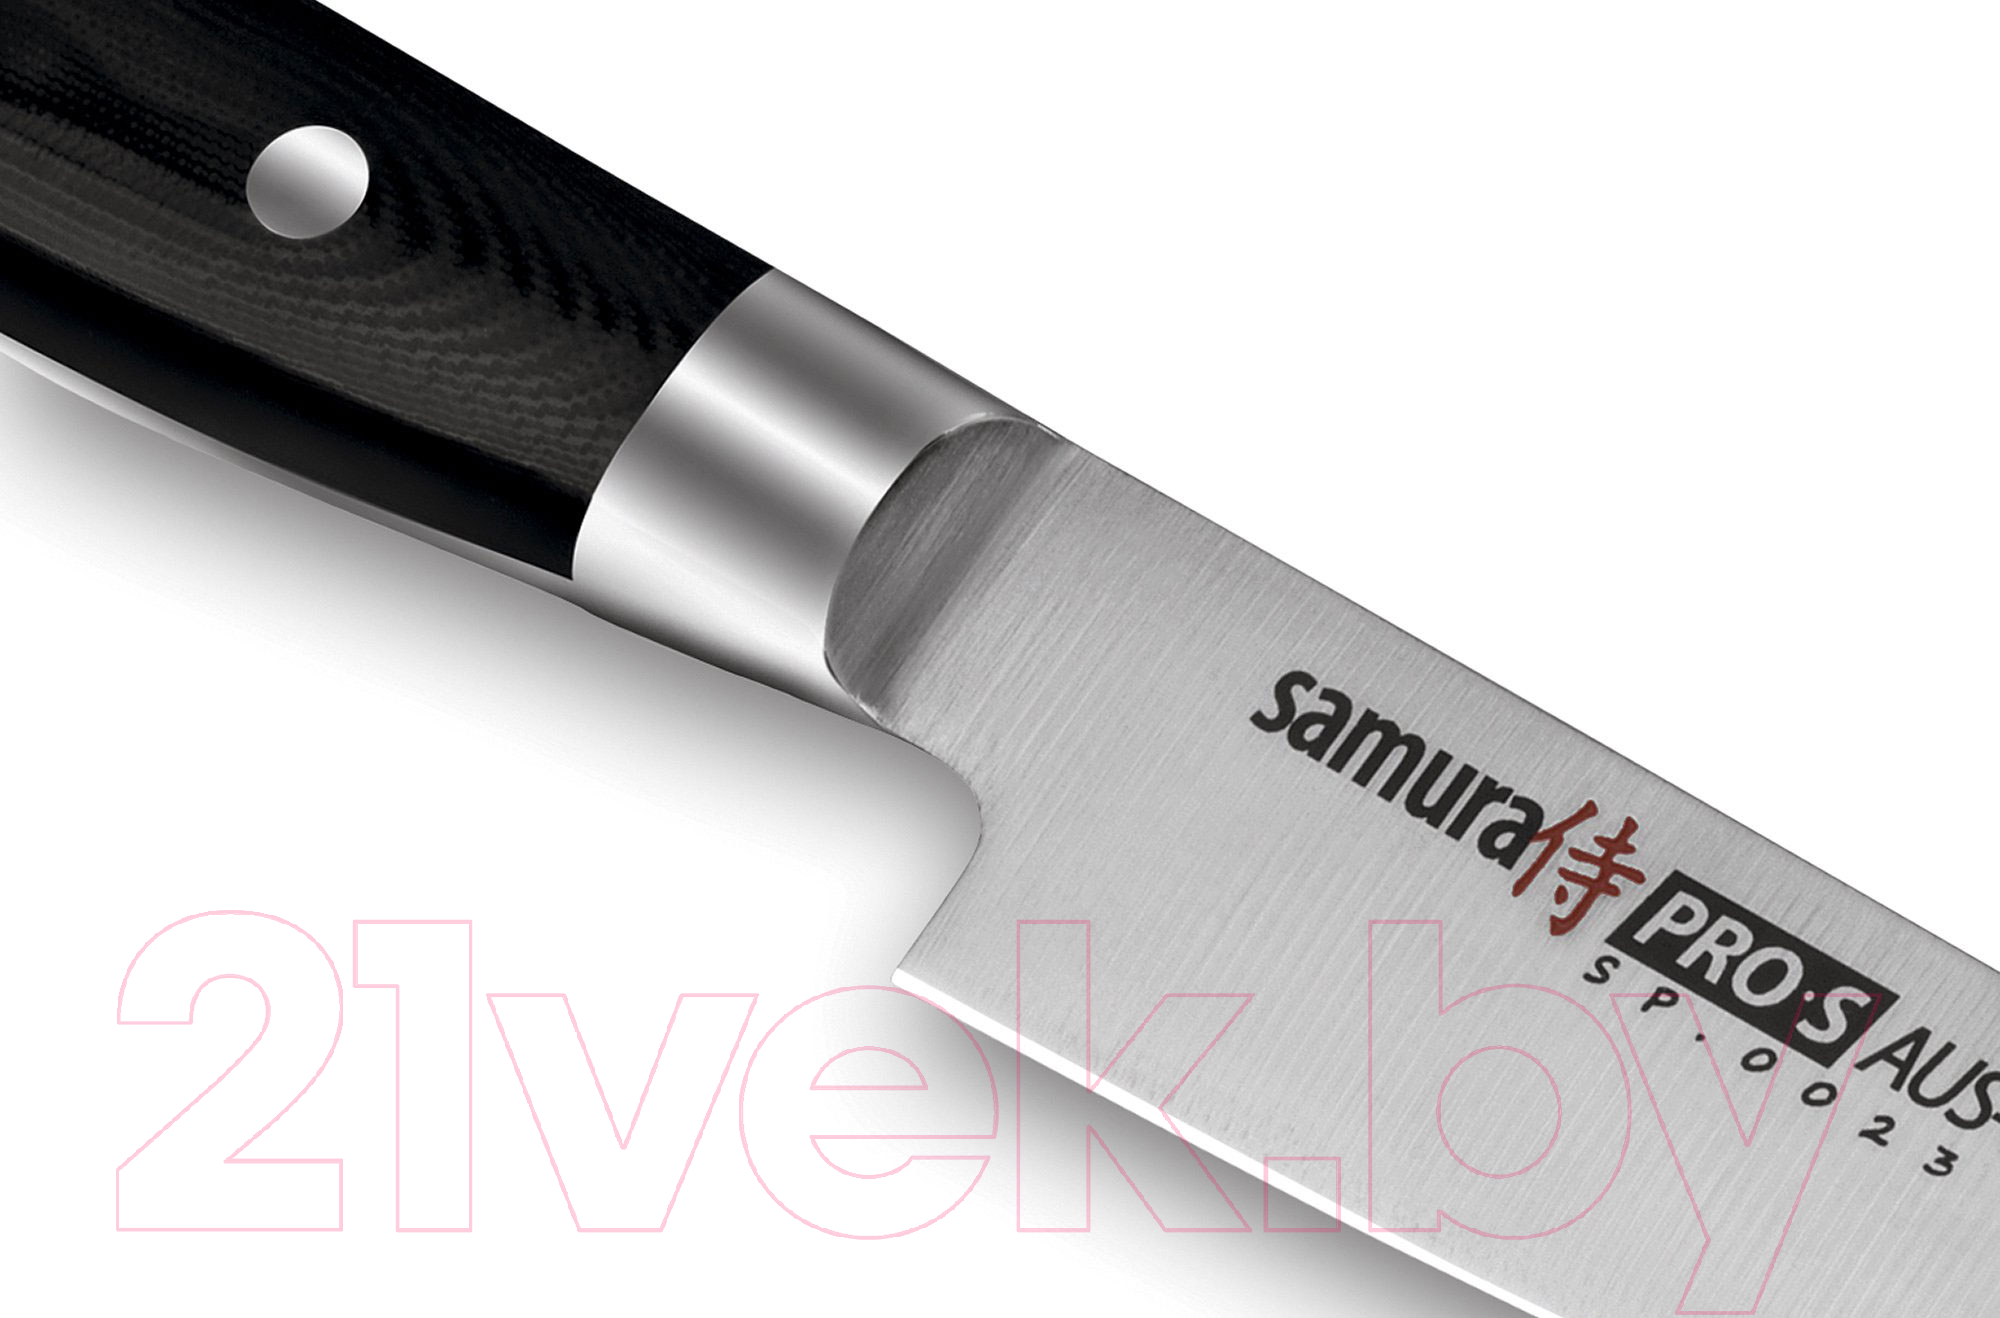 Нож Samura Pro-S SP-0023